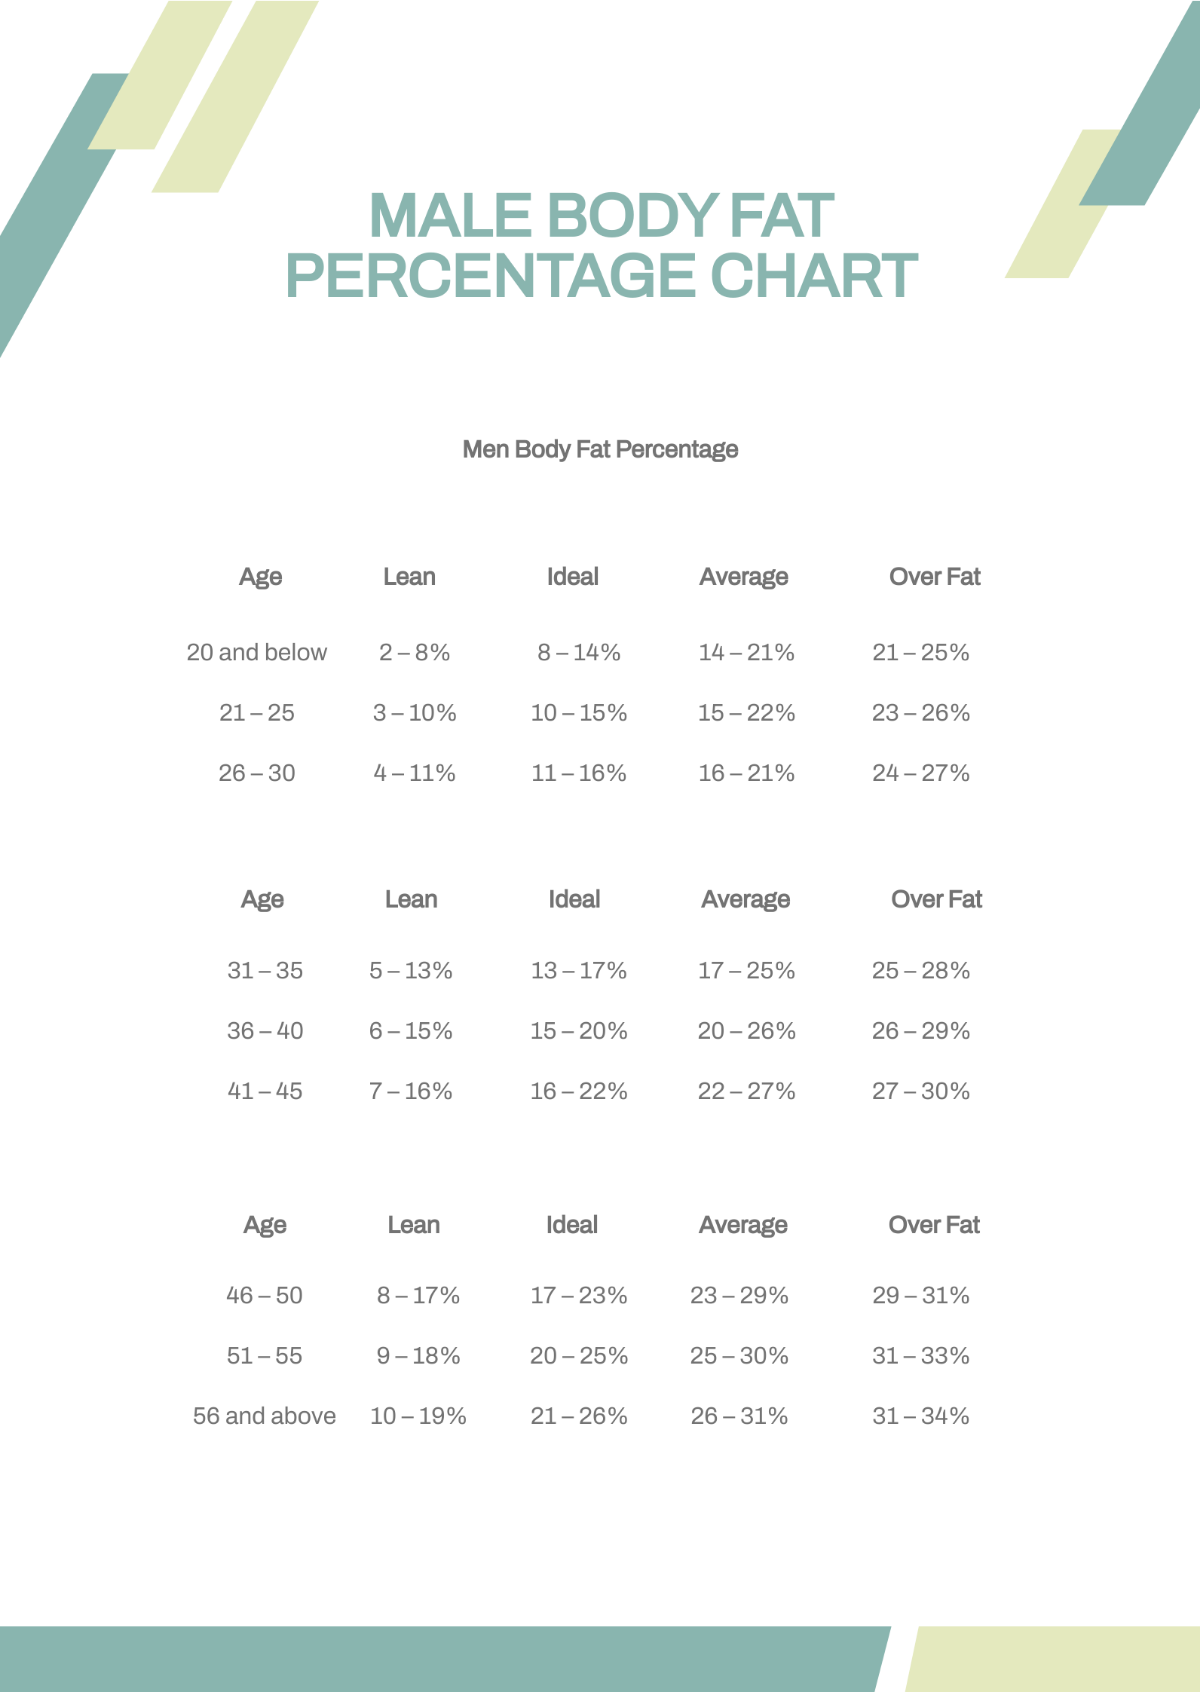 Male Body Fat Percentage Chart Template